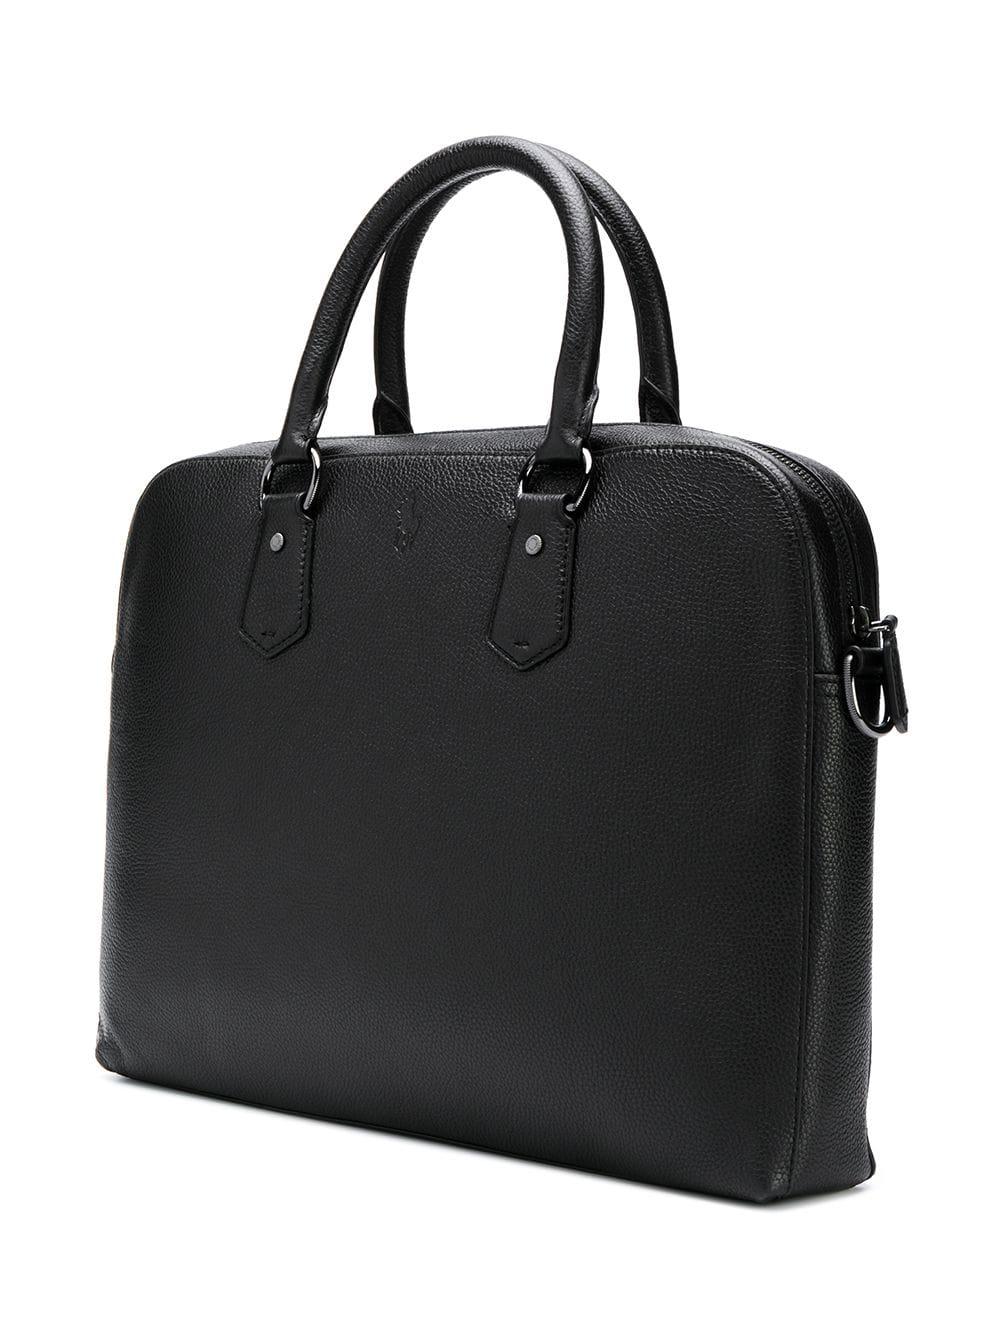 Lyst - Polo Ralph Lauren Pebbled Laptop Bag in Black for Men